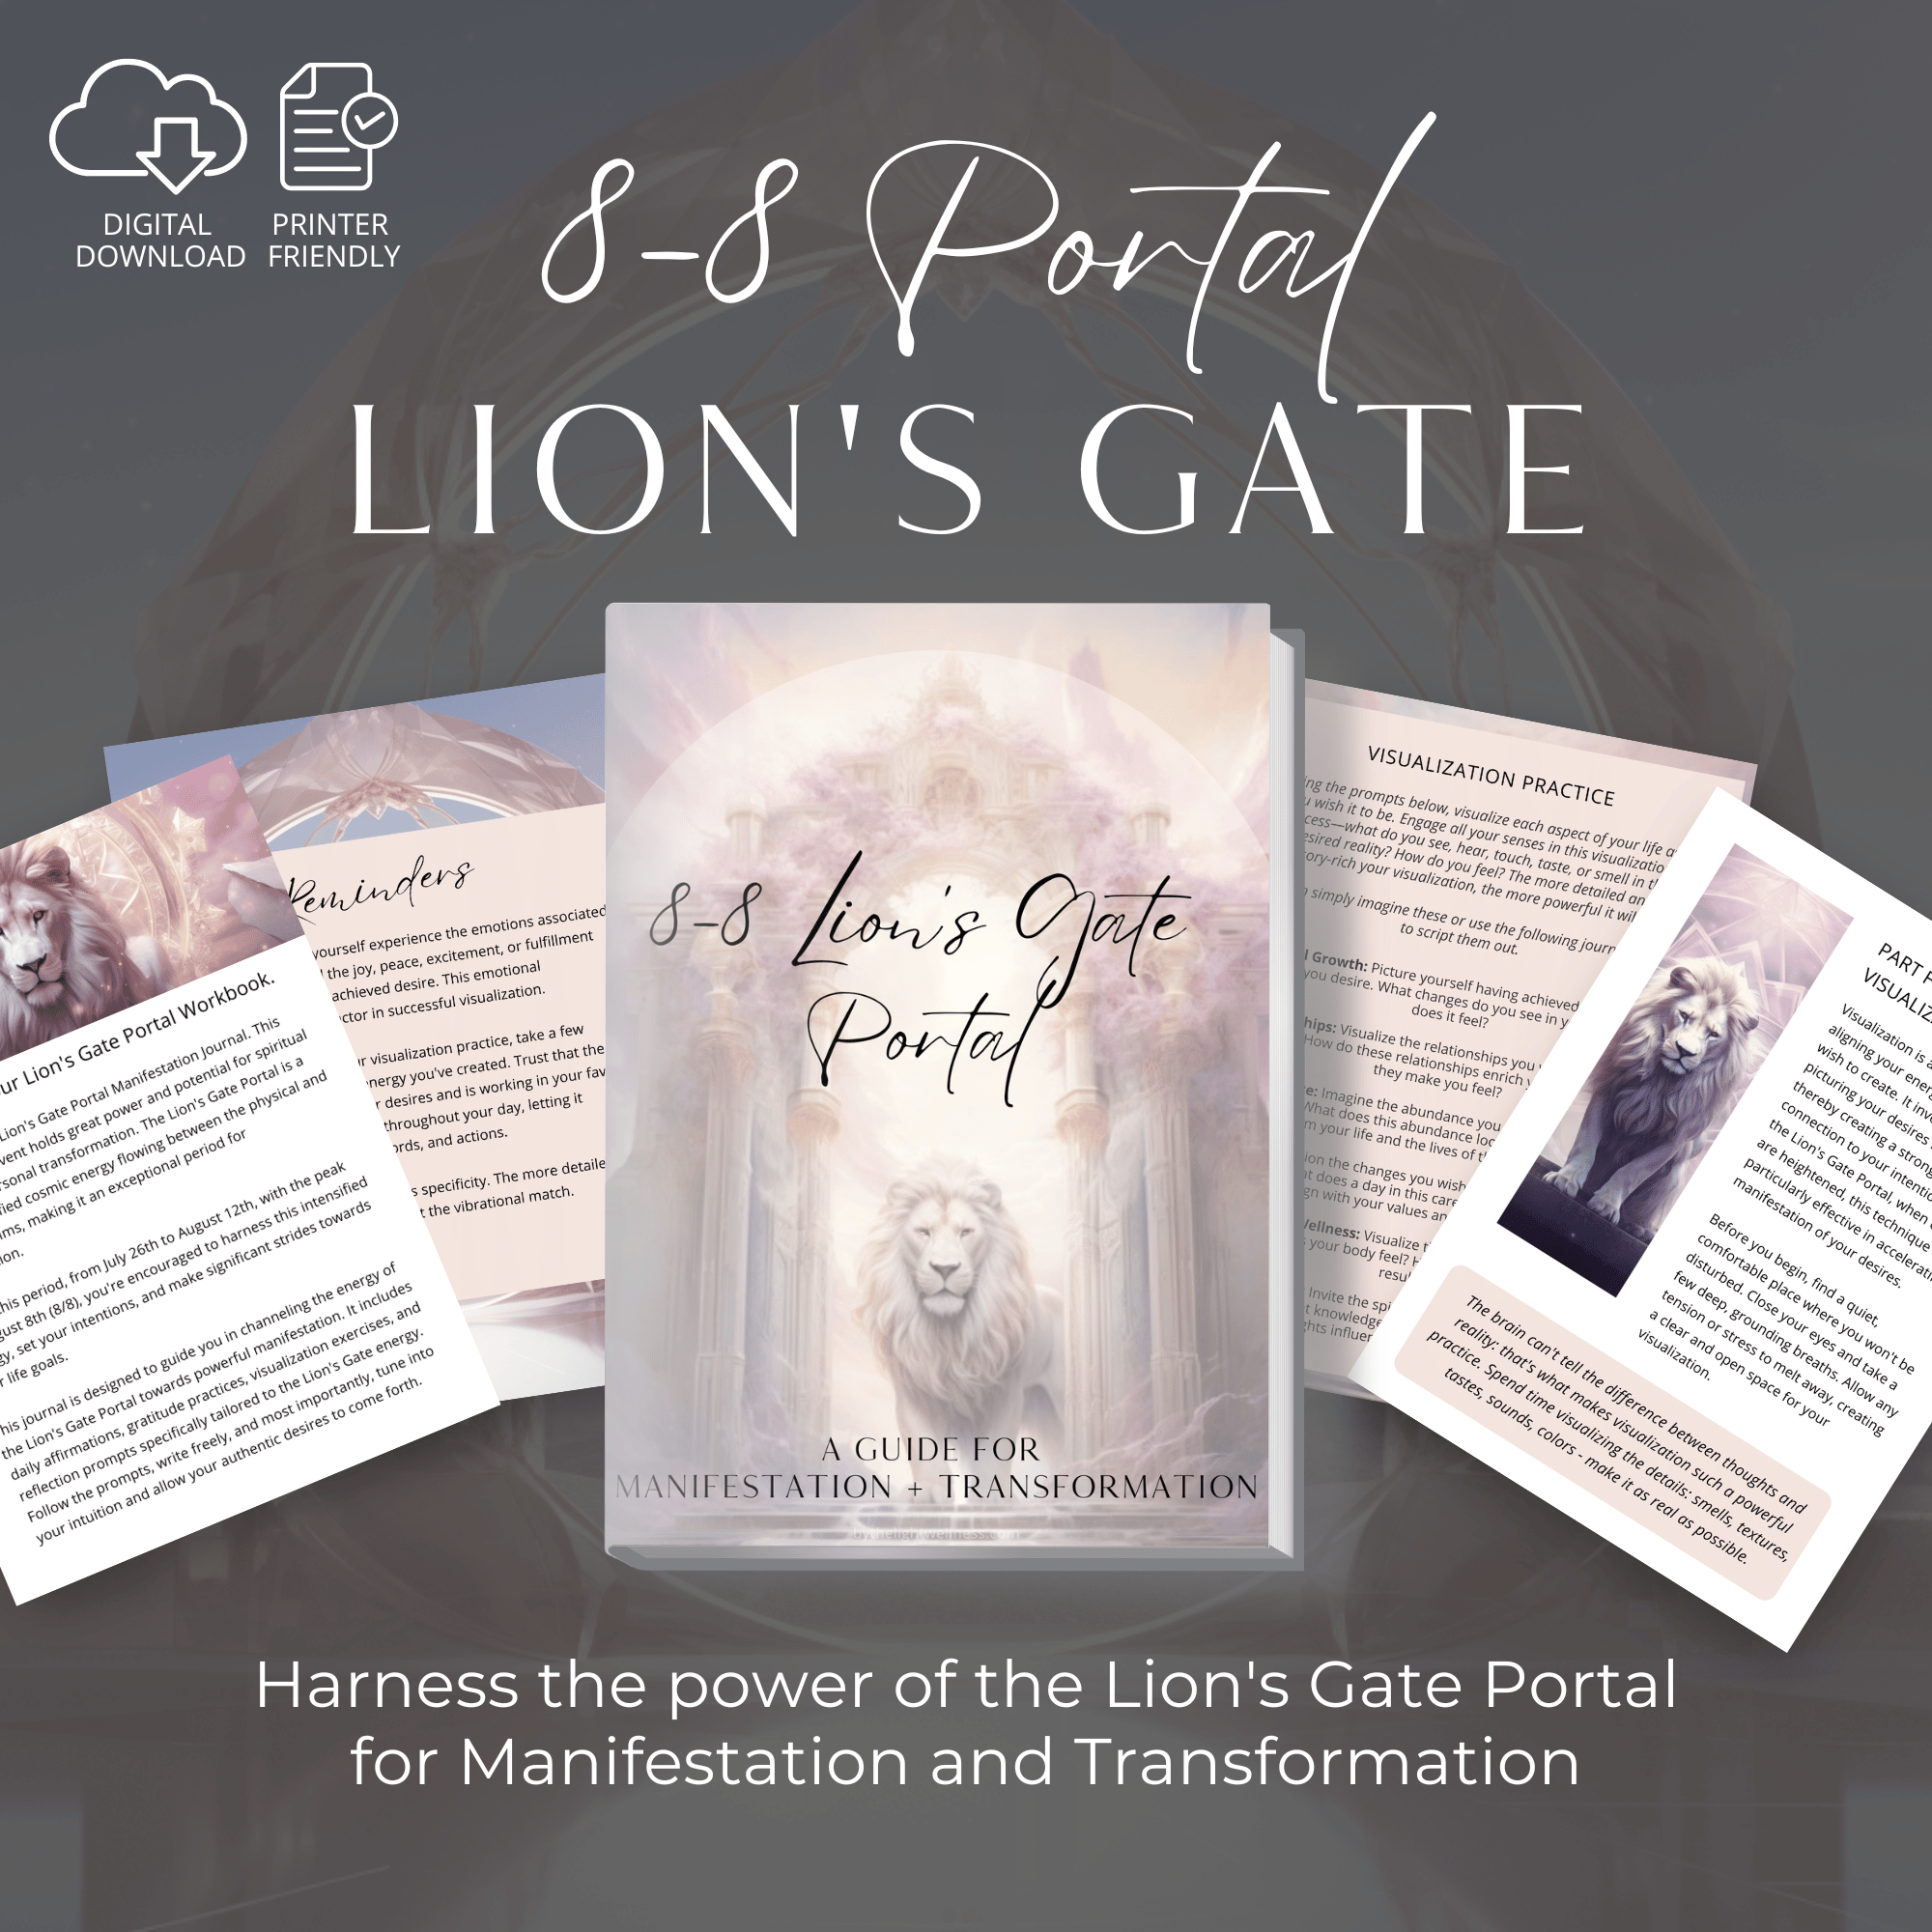 8-8 Lion's Gate Portal Journal | Instant Download